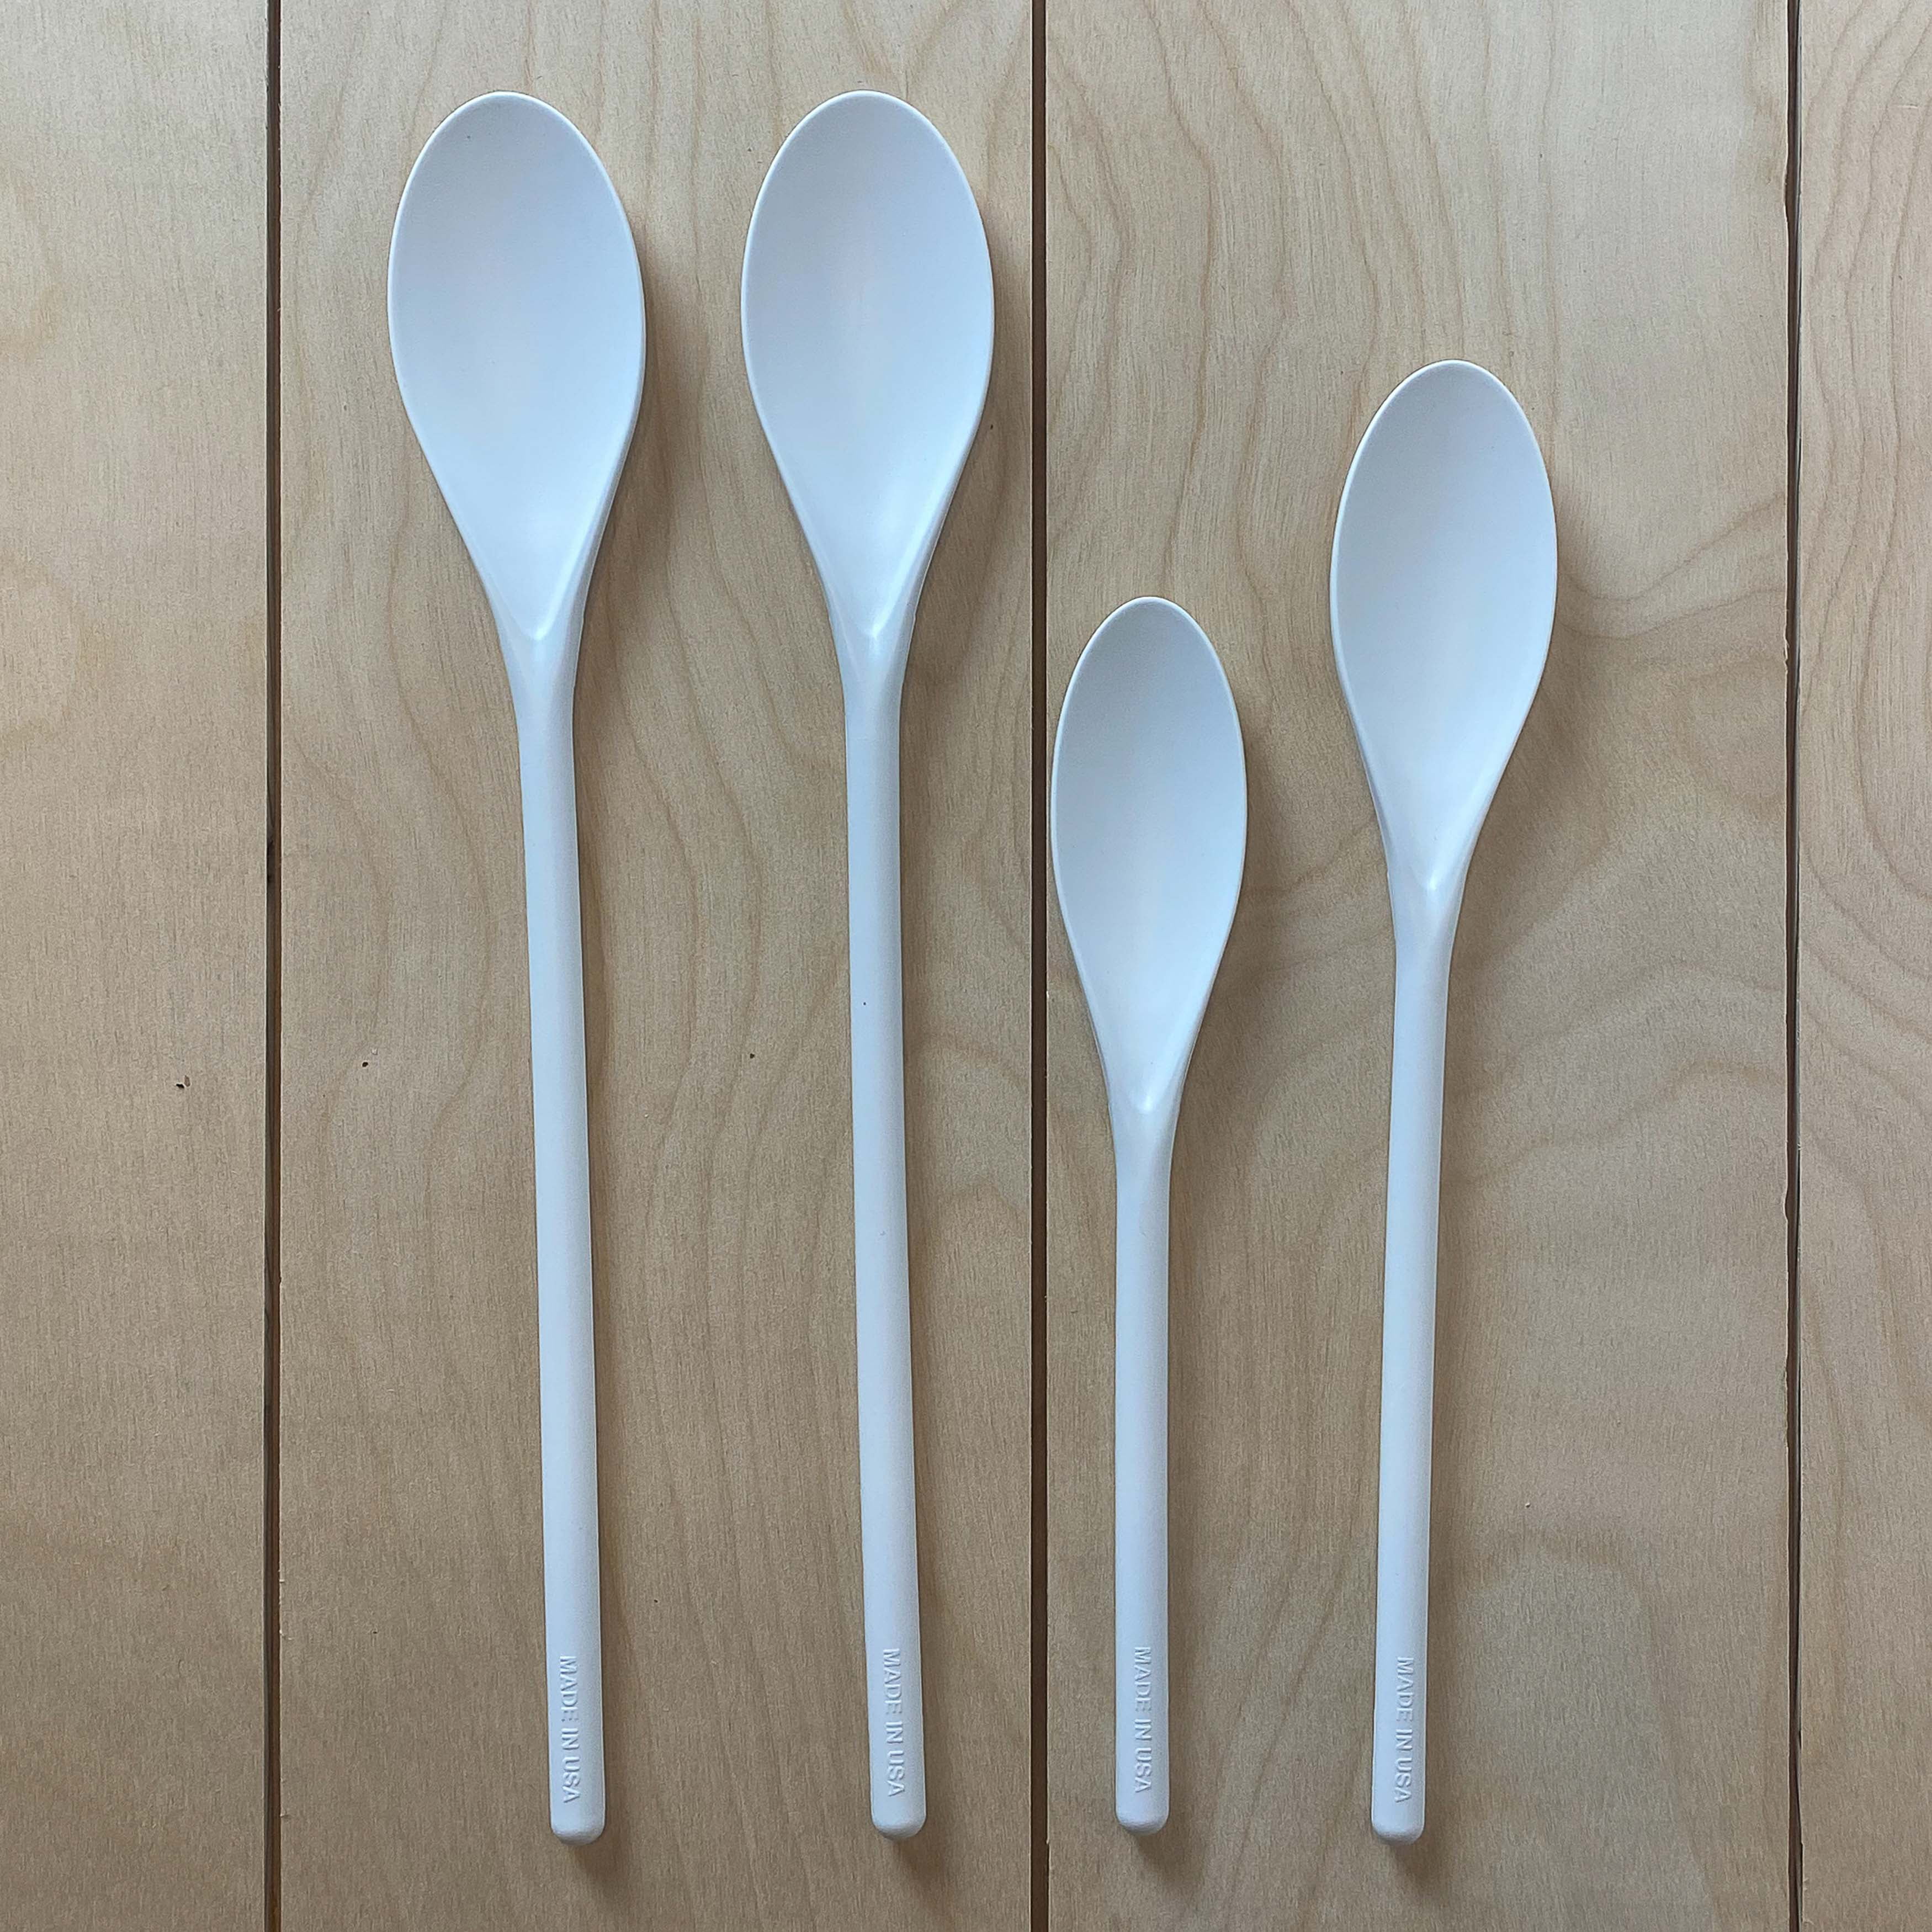 White Hot® Infant Spoons